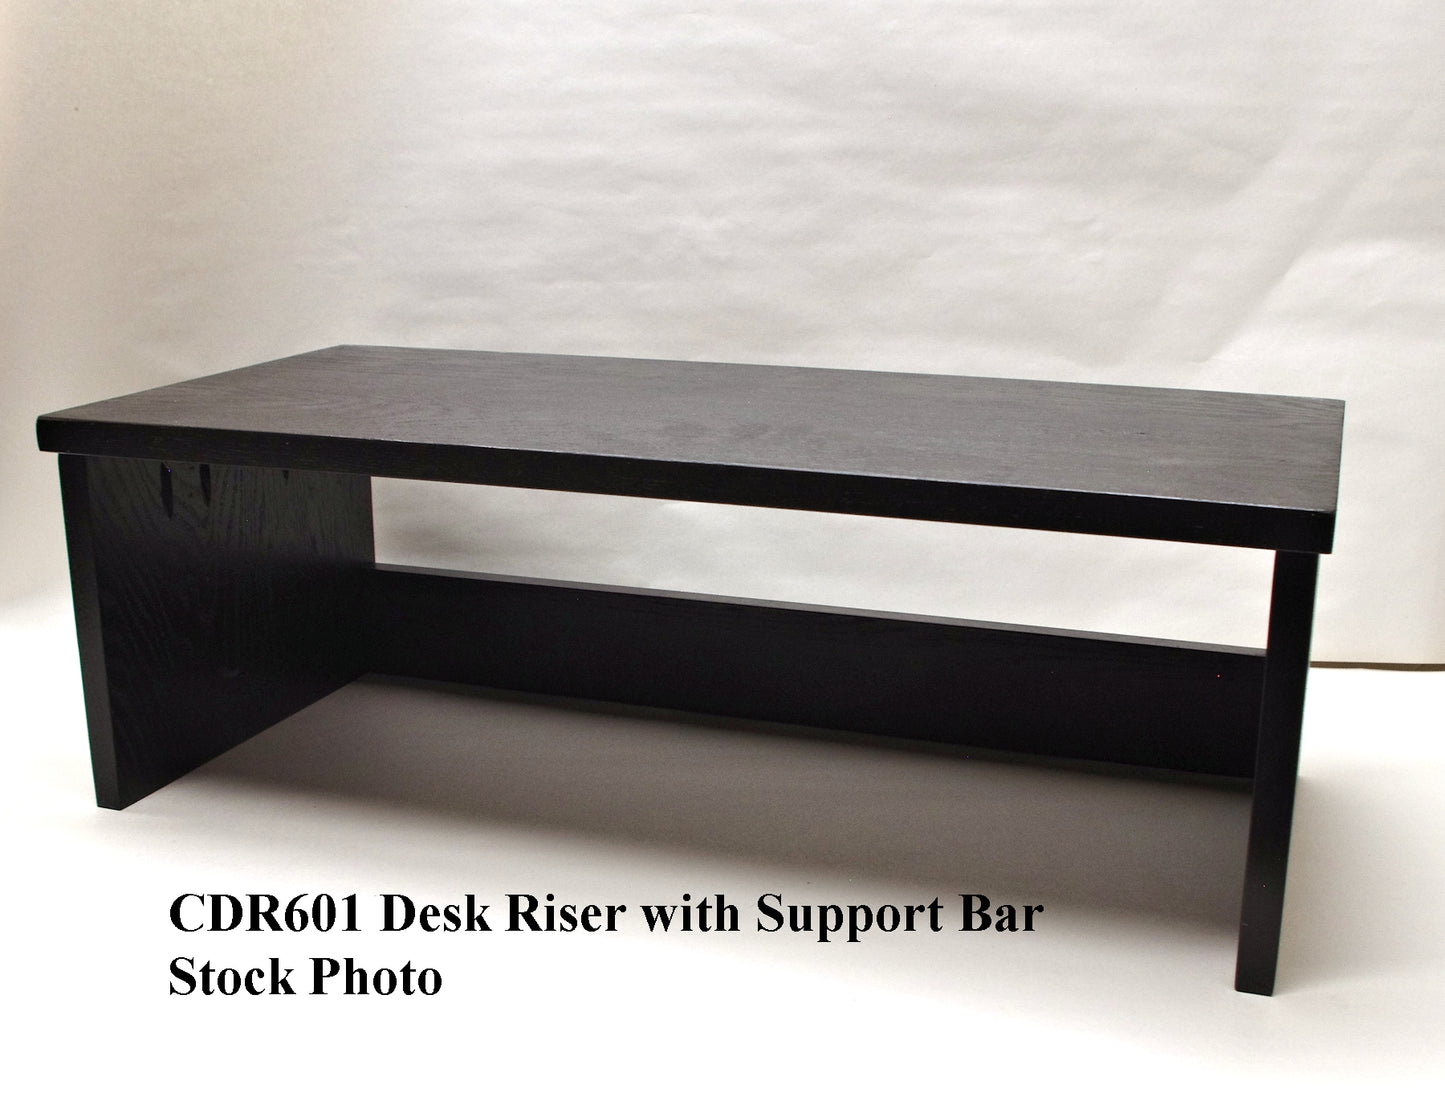 CDR601 Desk Riser with Support Bar - 24" Length